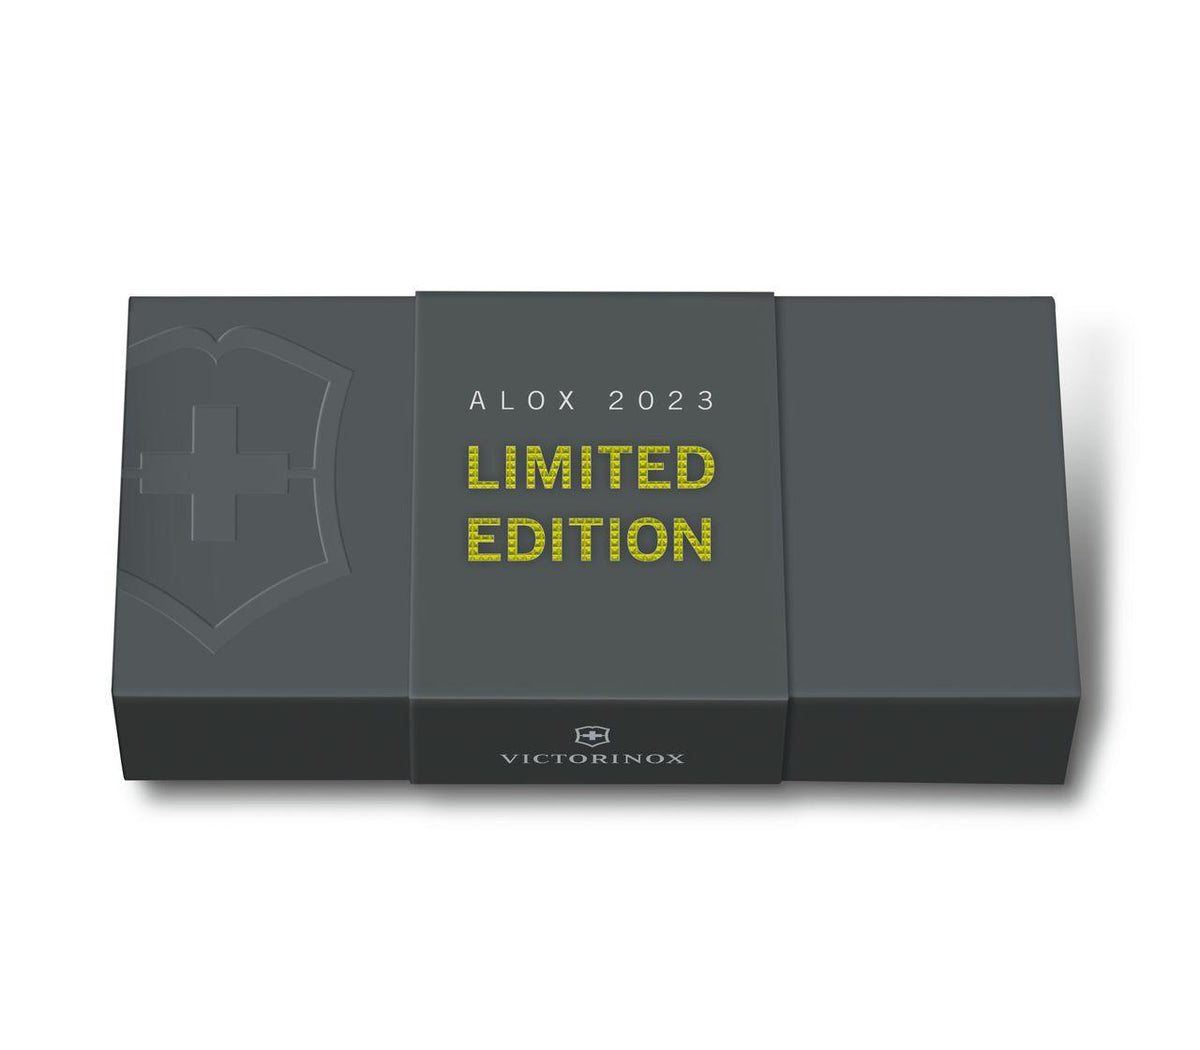 Victorinox - Small Swiss Army Knife - Classic ALOX 2023 Limited Edition